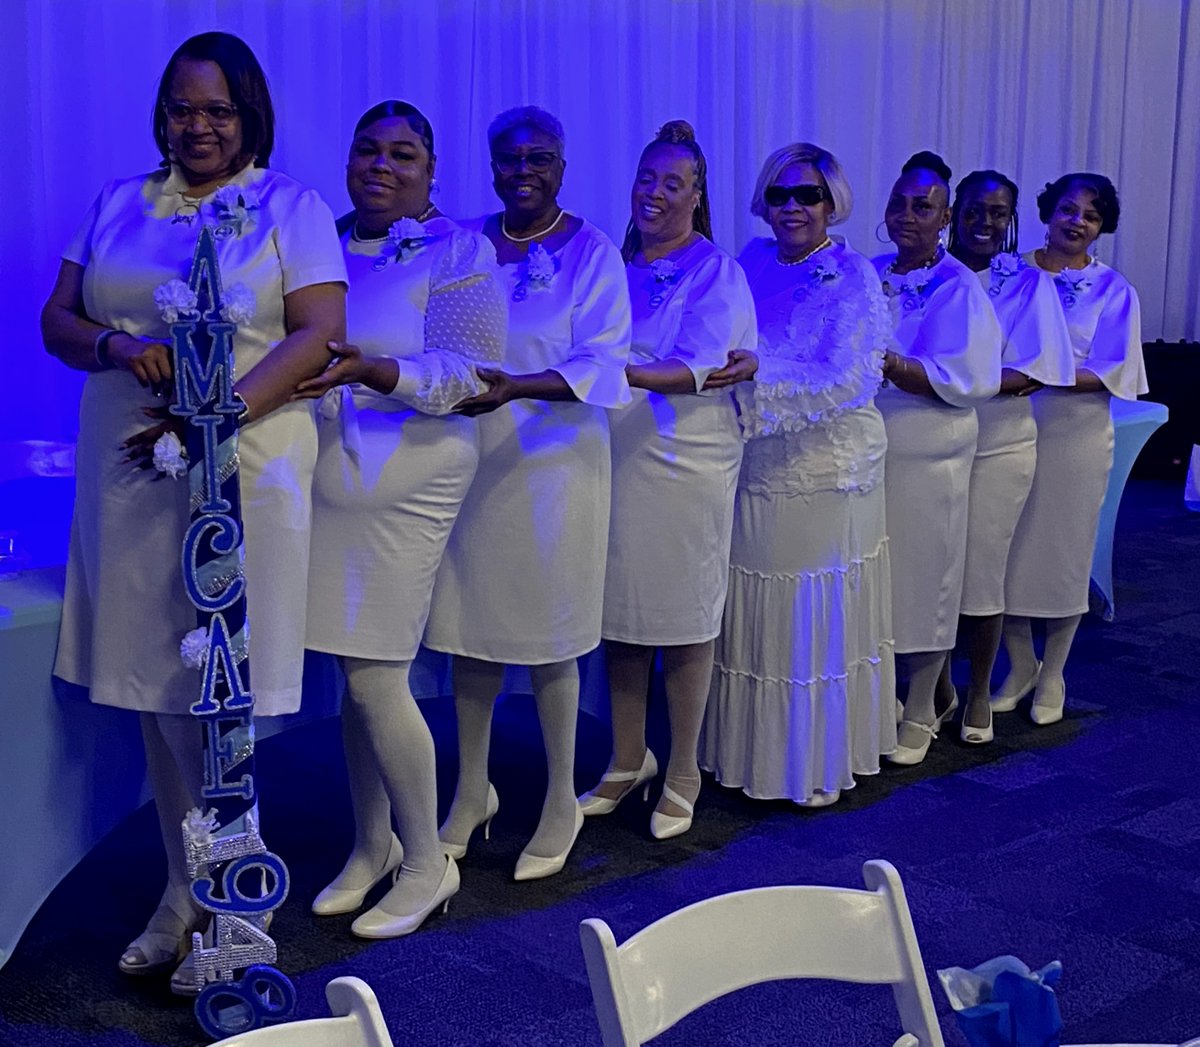 Congratulations to the newest members of the #DetroitZetaAmicae - welcome to the #BlueAndWhiteFamily

The #DetroitZetas celebrate our #FinerFriends 💙

#zetaamicae #ZetaPhiBeta #betaomicronzeta #embracetheswell